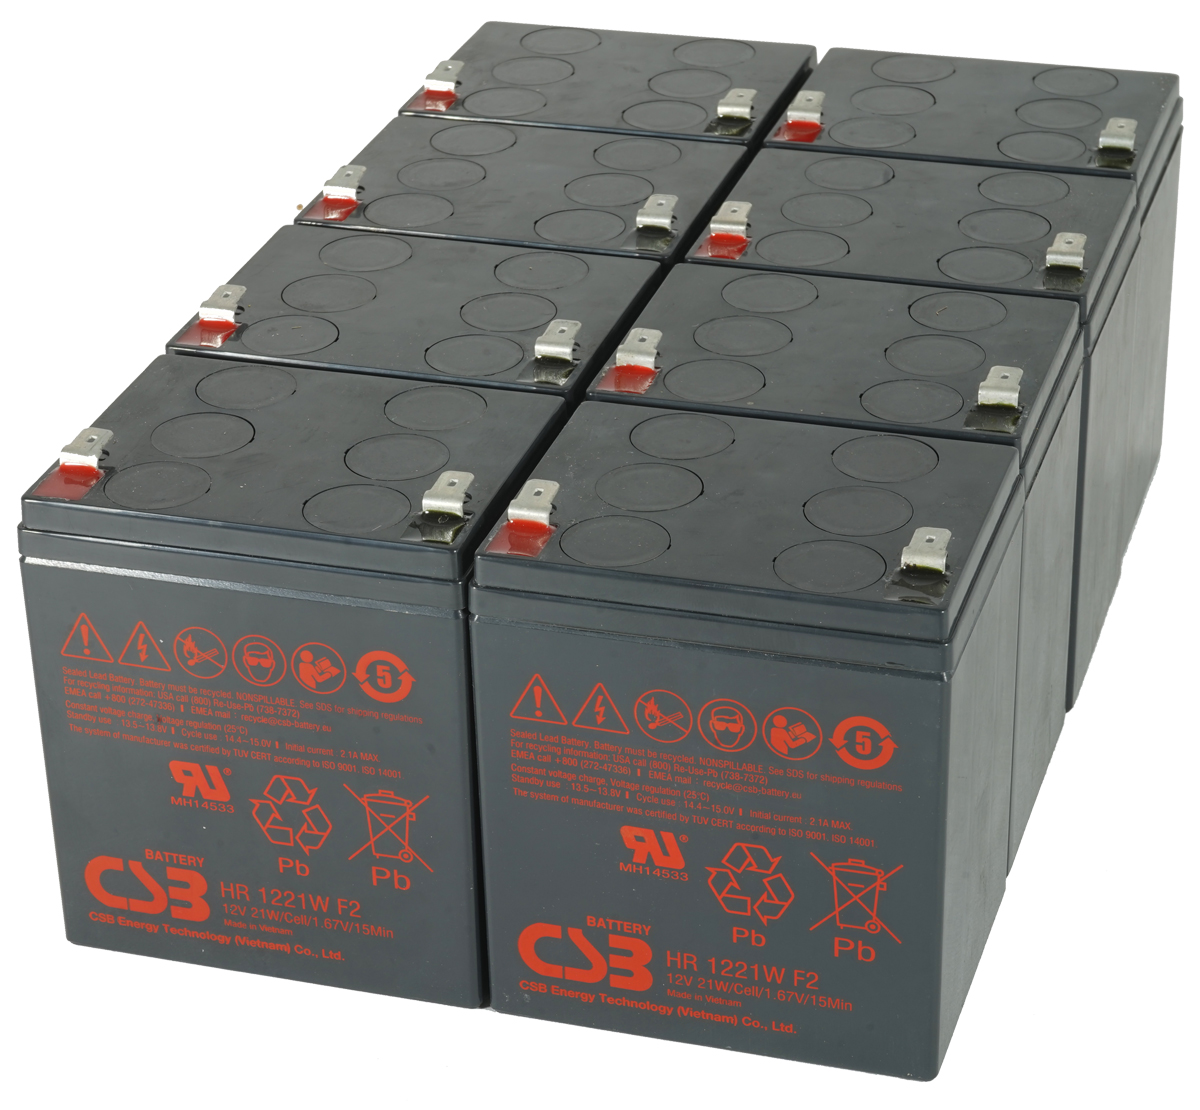 MDS152 UPS Battery Kit - Replaces APC RBC152